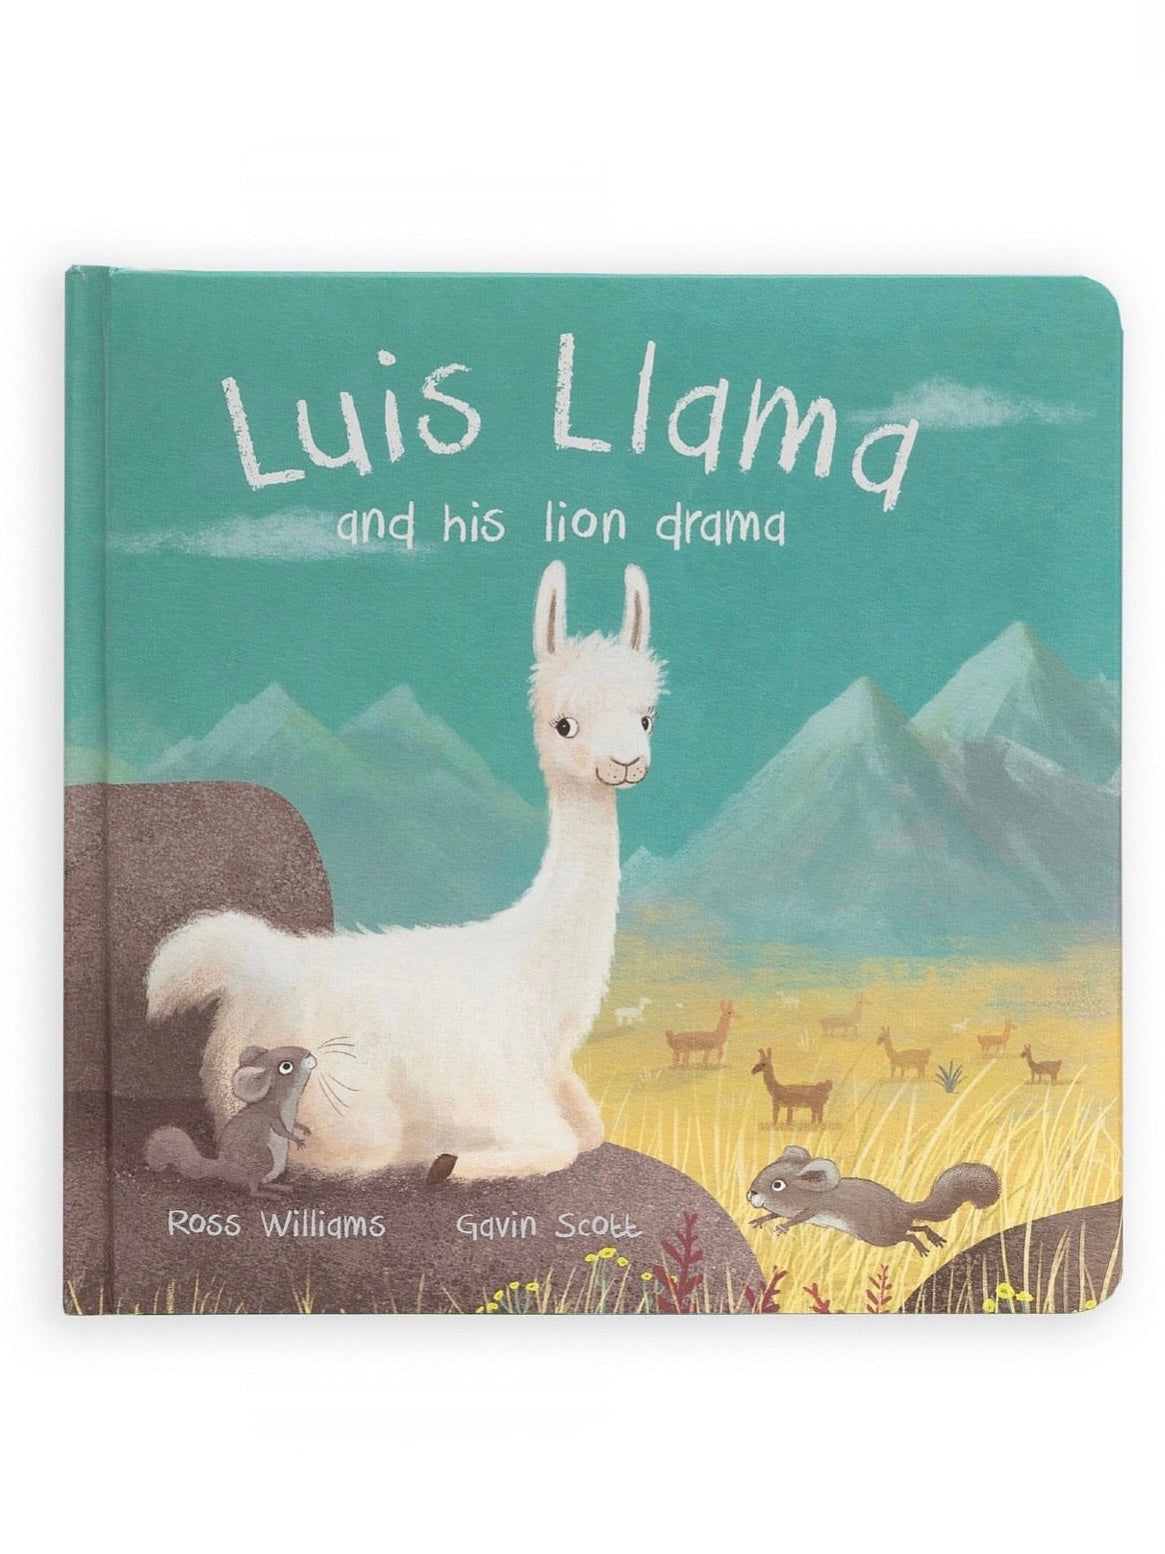 Luis Llama and His Lion Drama